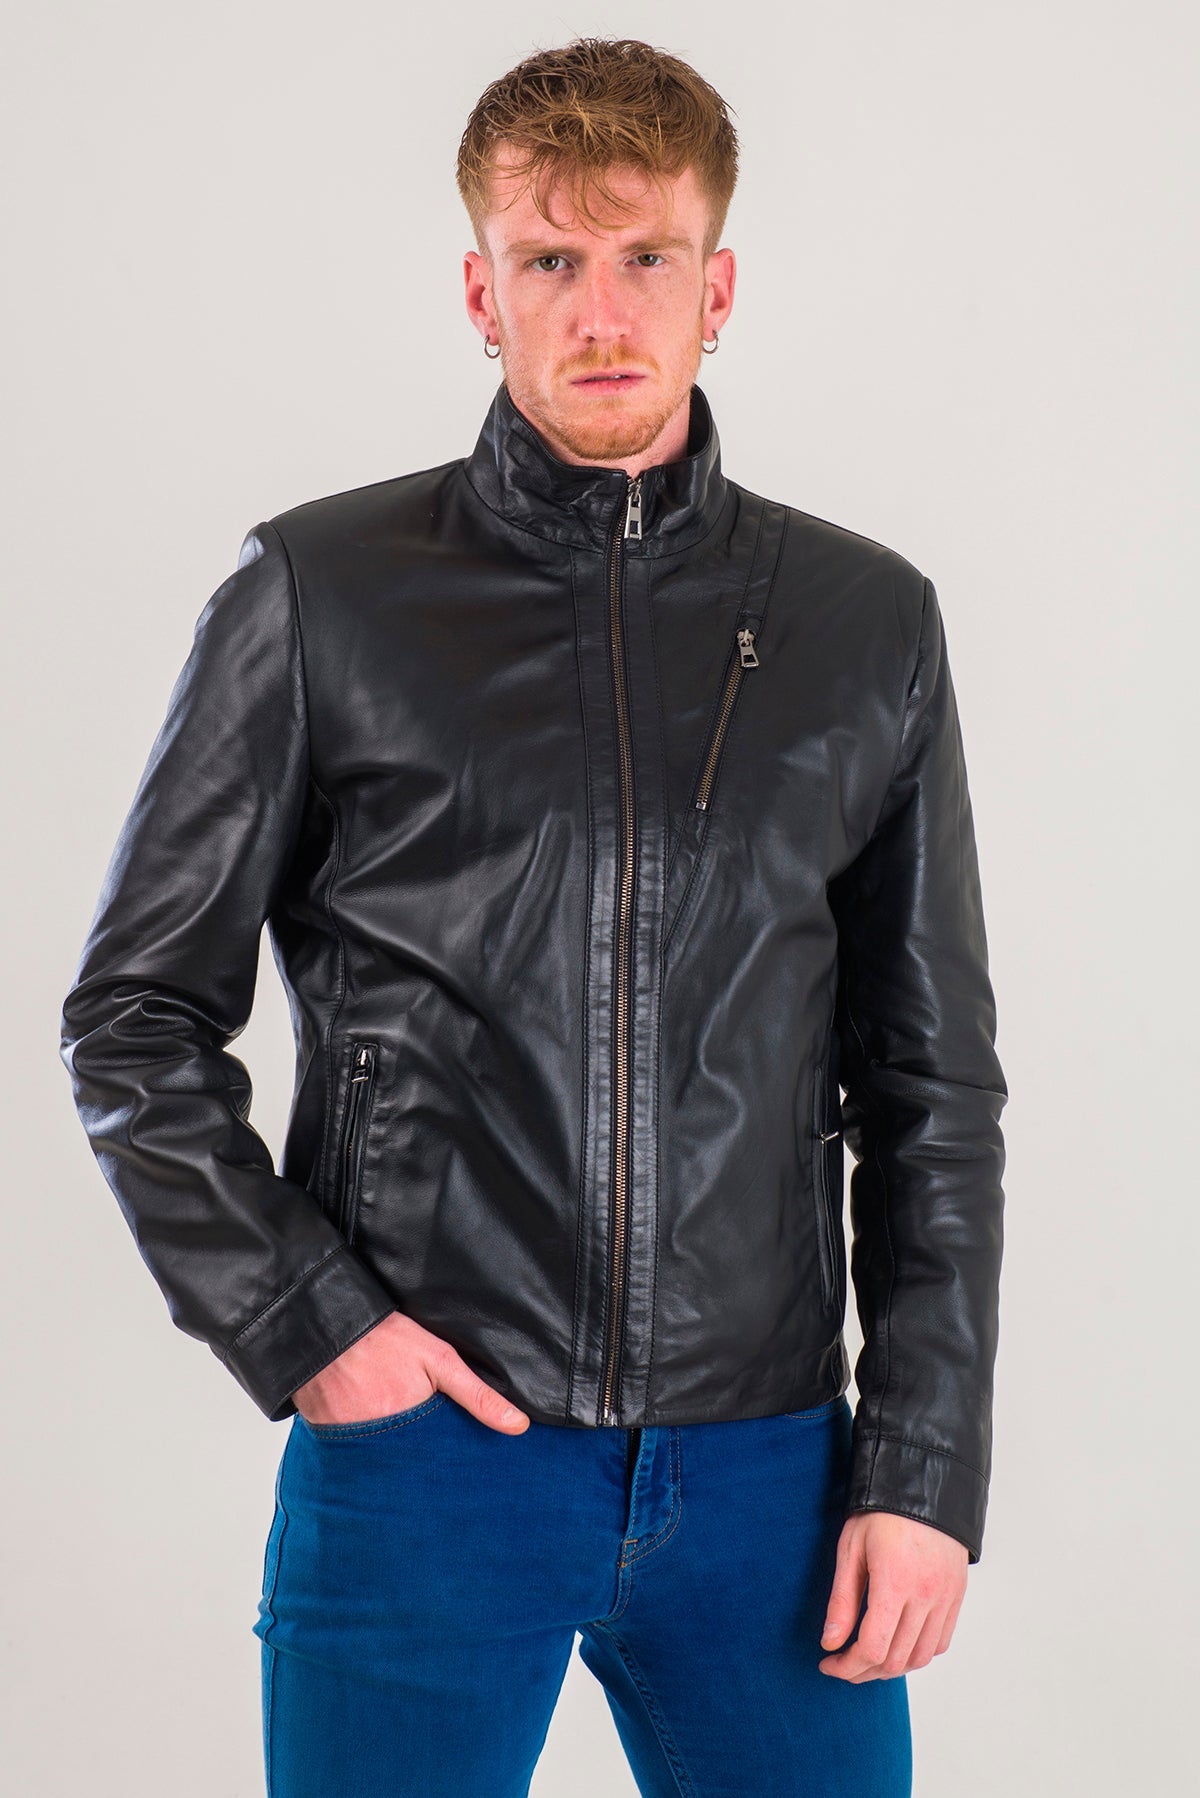 Brian Sleek Essential Leather Jacket – CW Leather